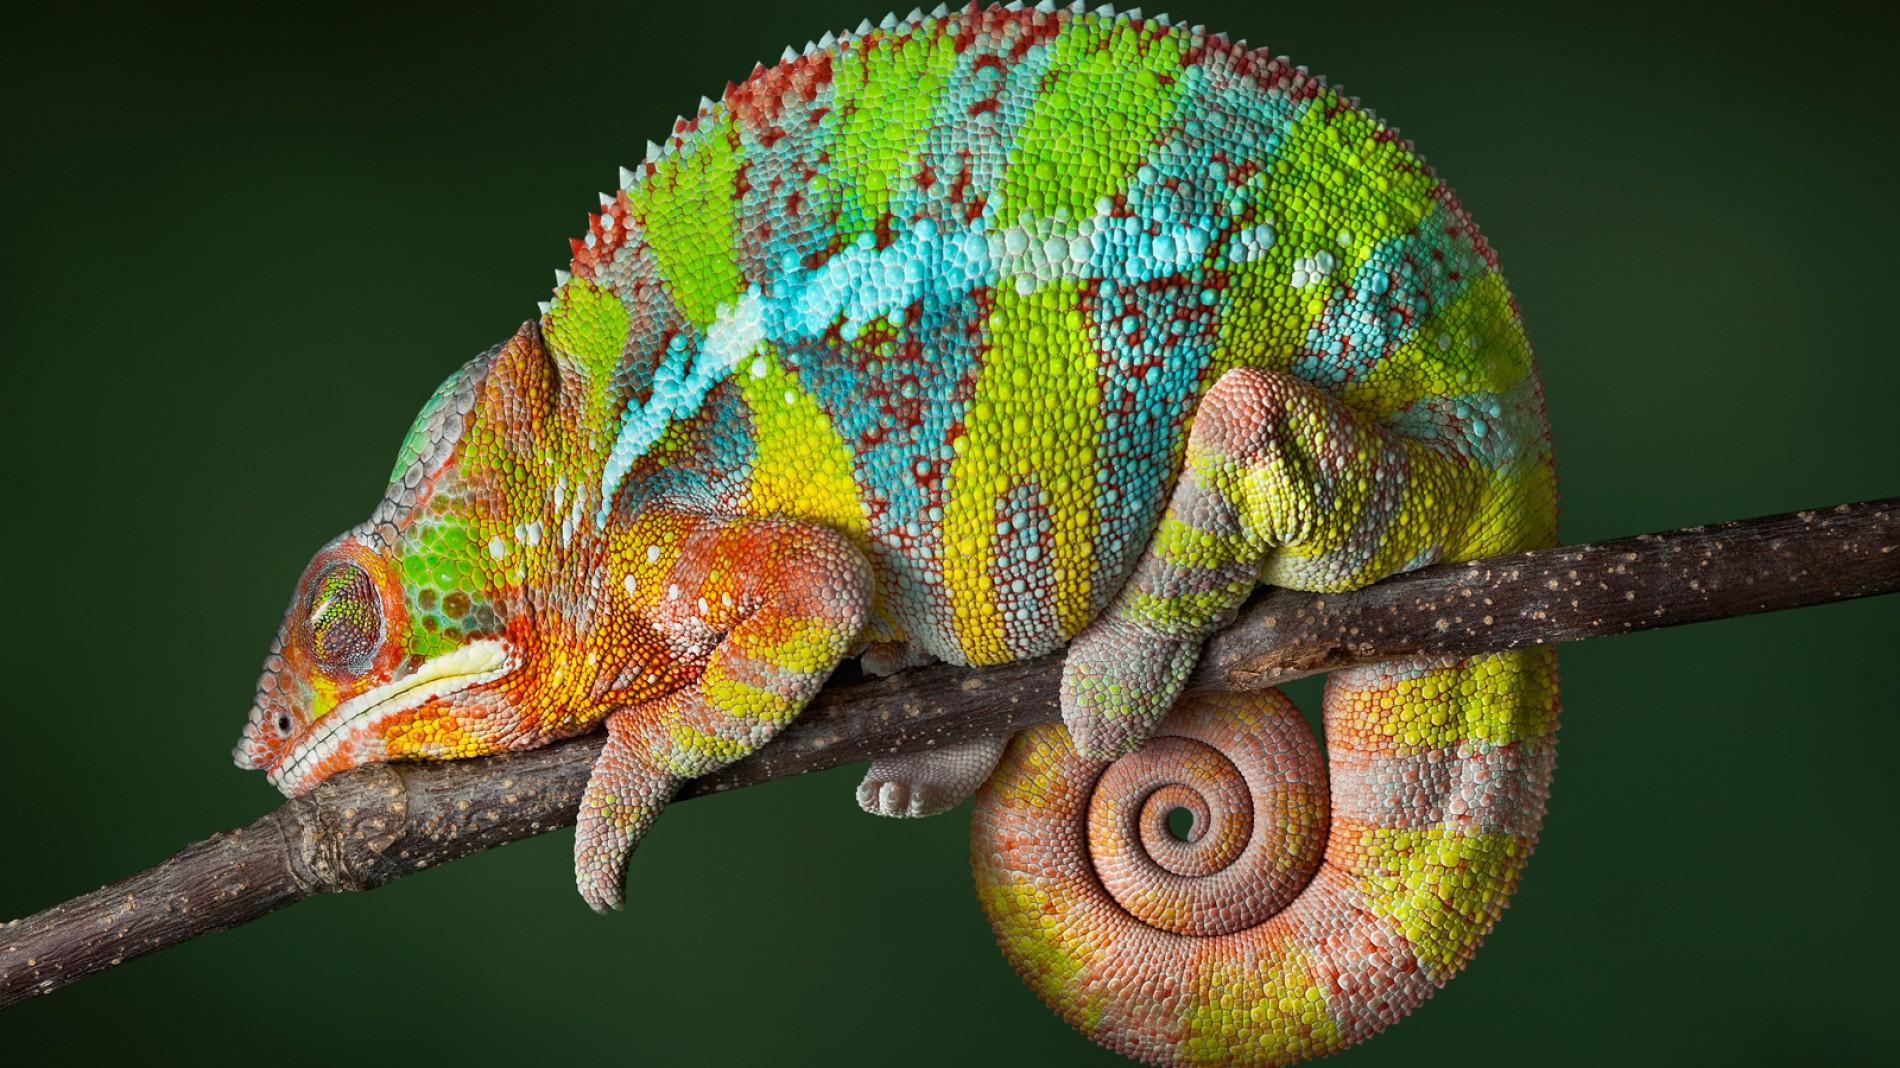 Chameleon reptile photo